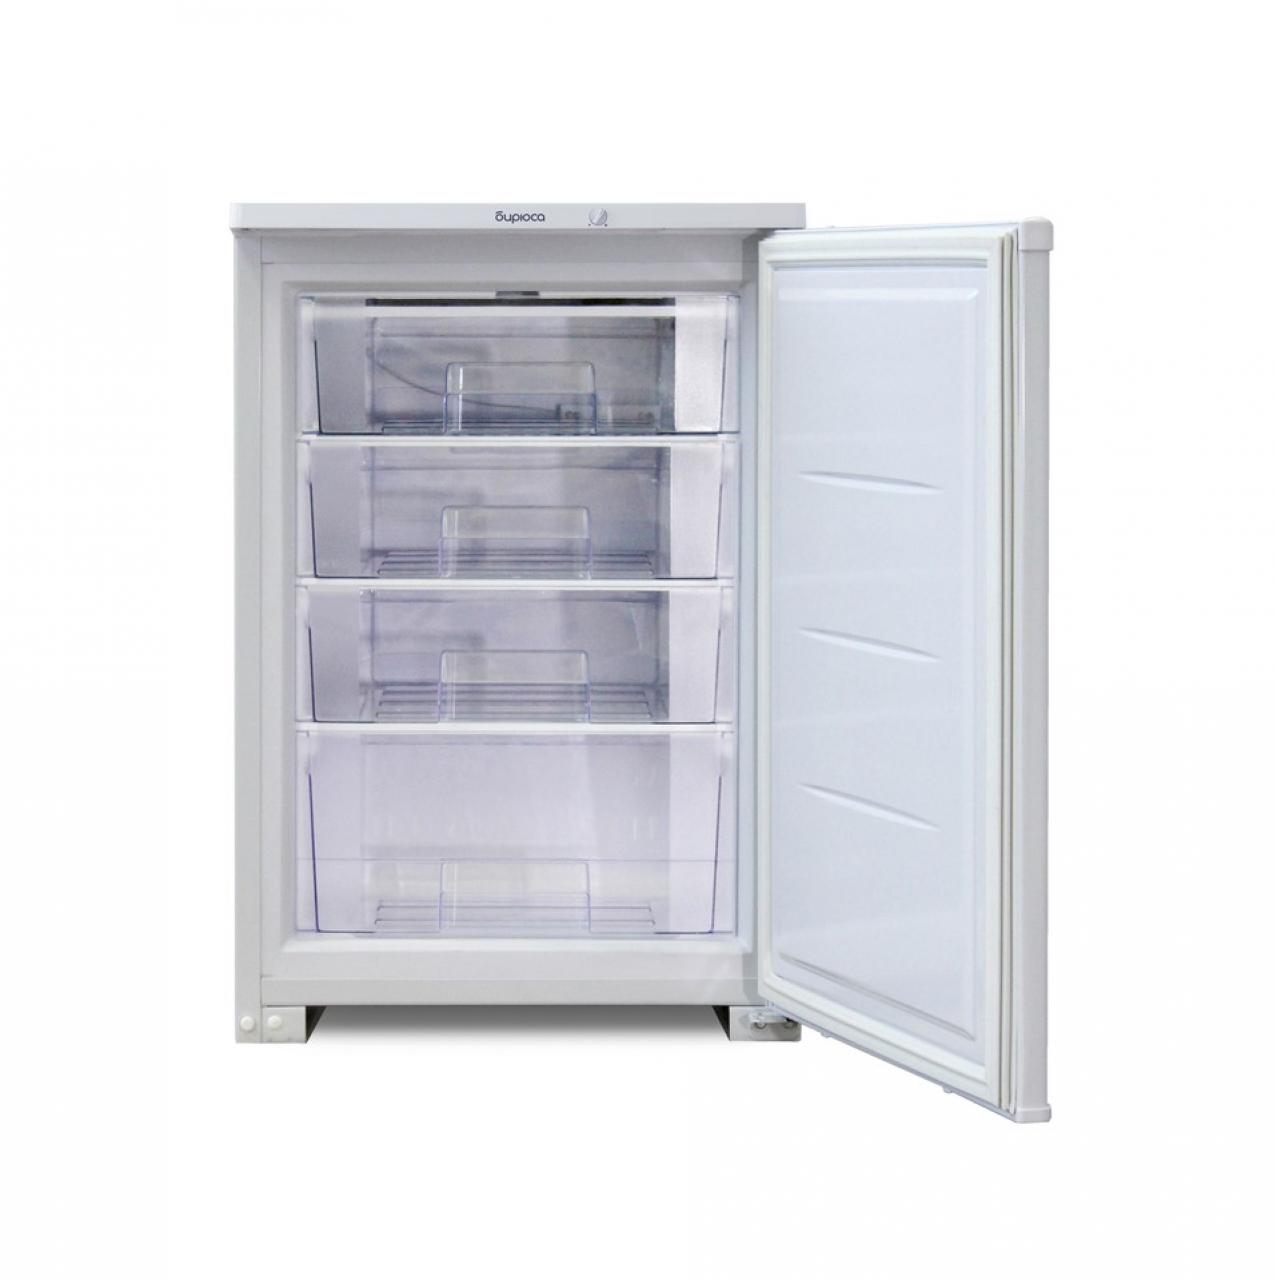 Gdfn5182a1 gor морозильный шкаф